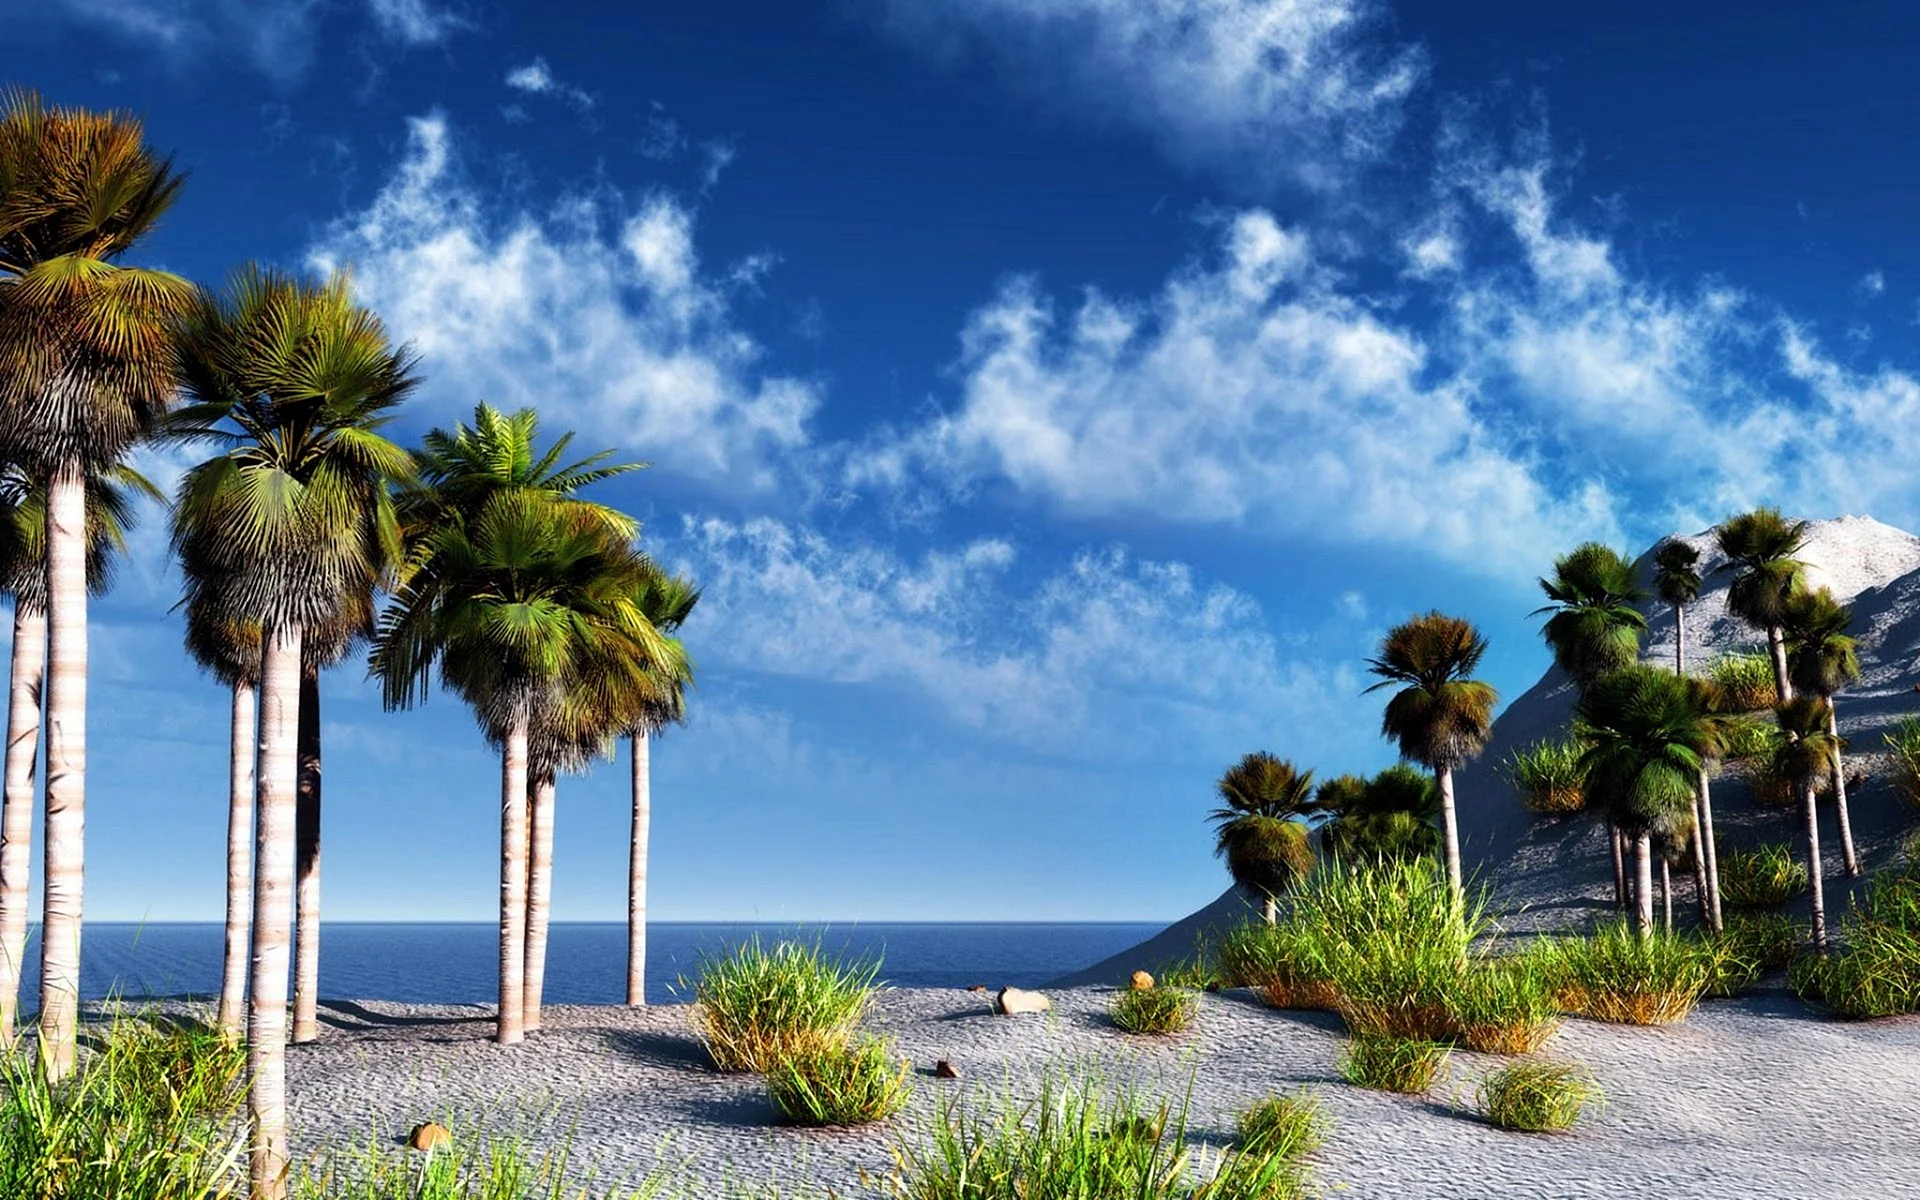 Beach Palm Trees Wallpaper